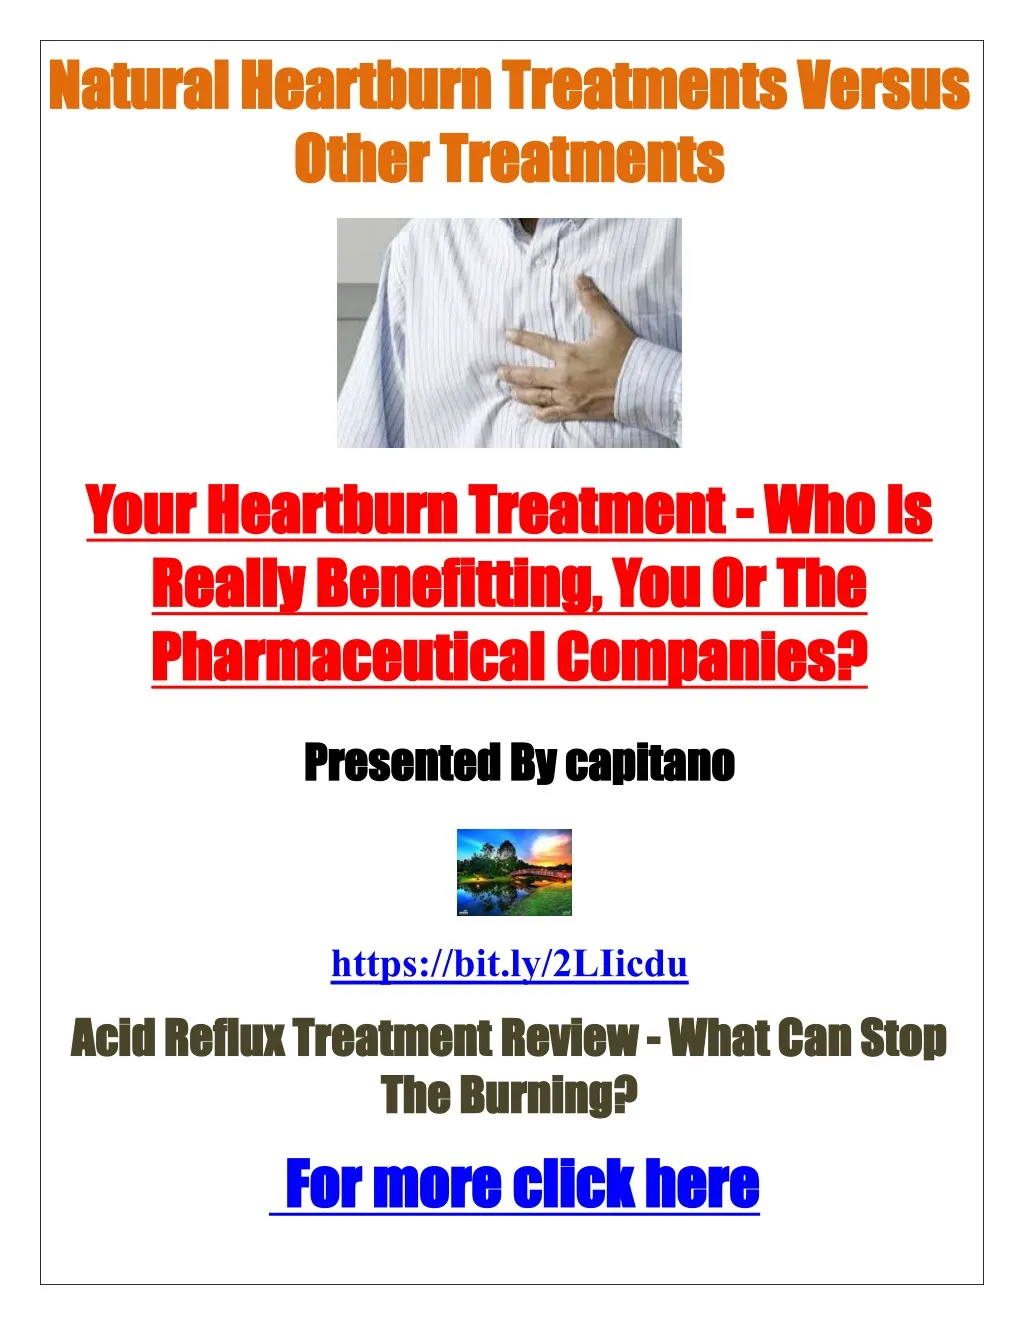 natural heartburn treatments versus natural